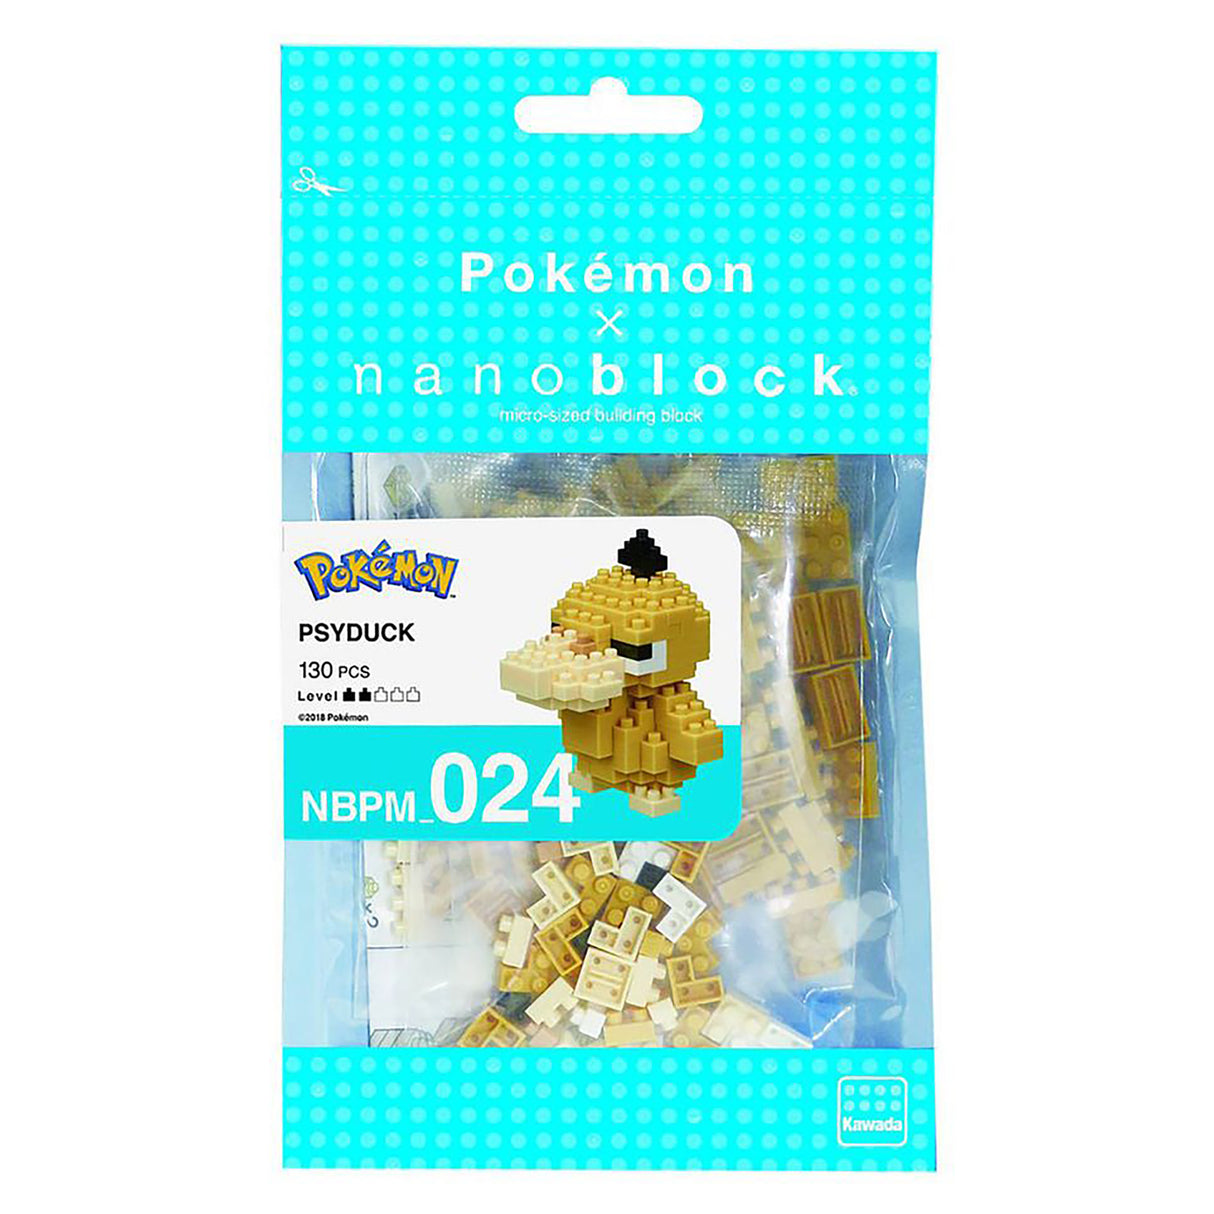 nanoblock x Pokemon Psyduck (130 pieces)